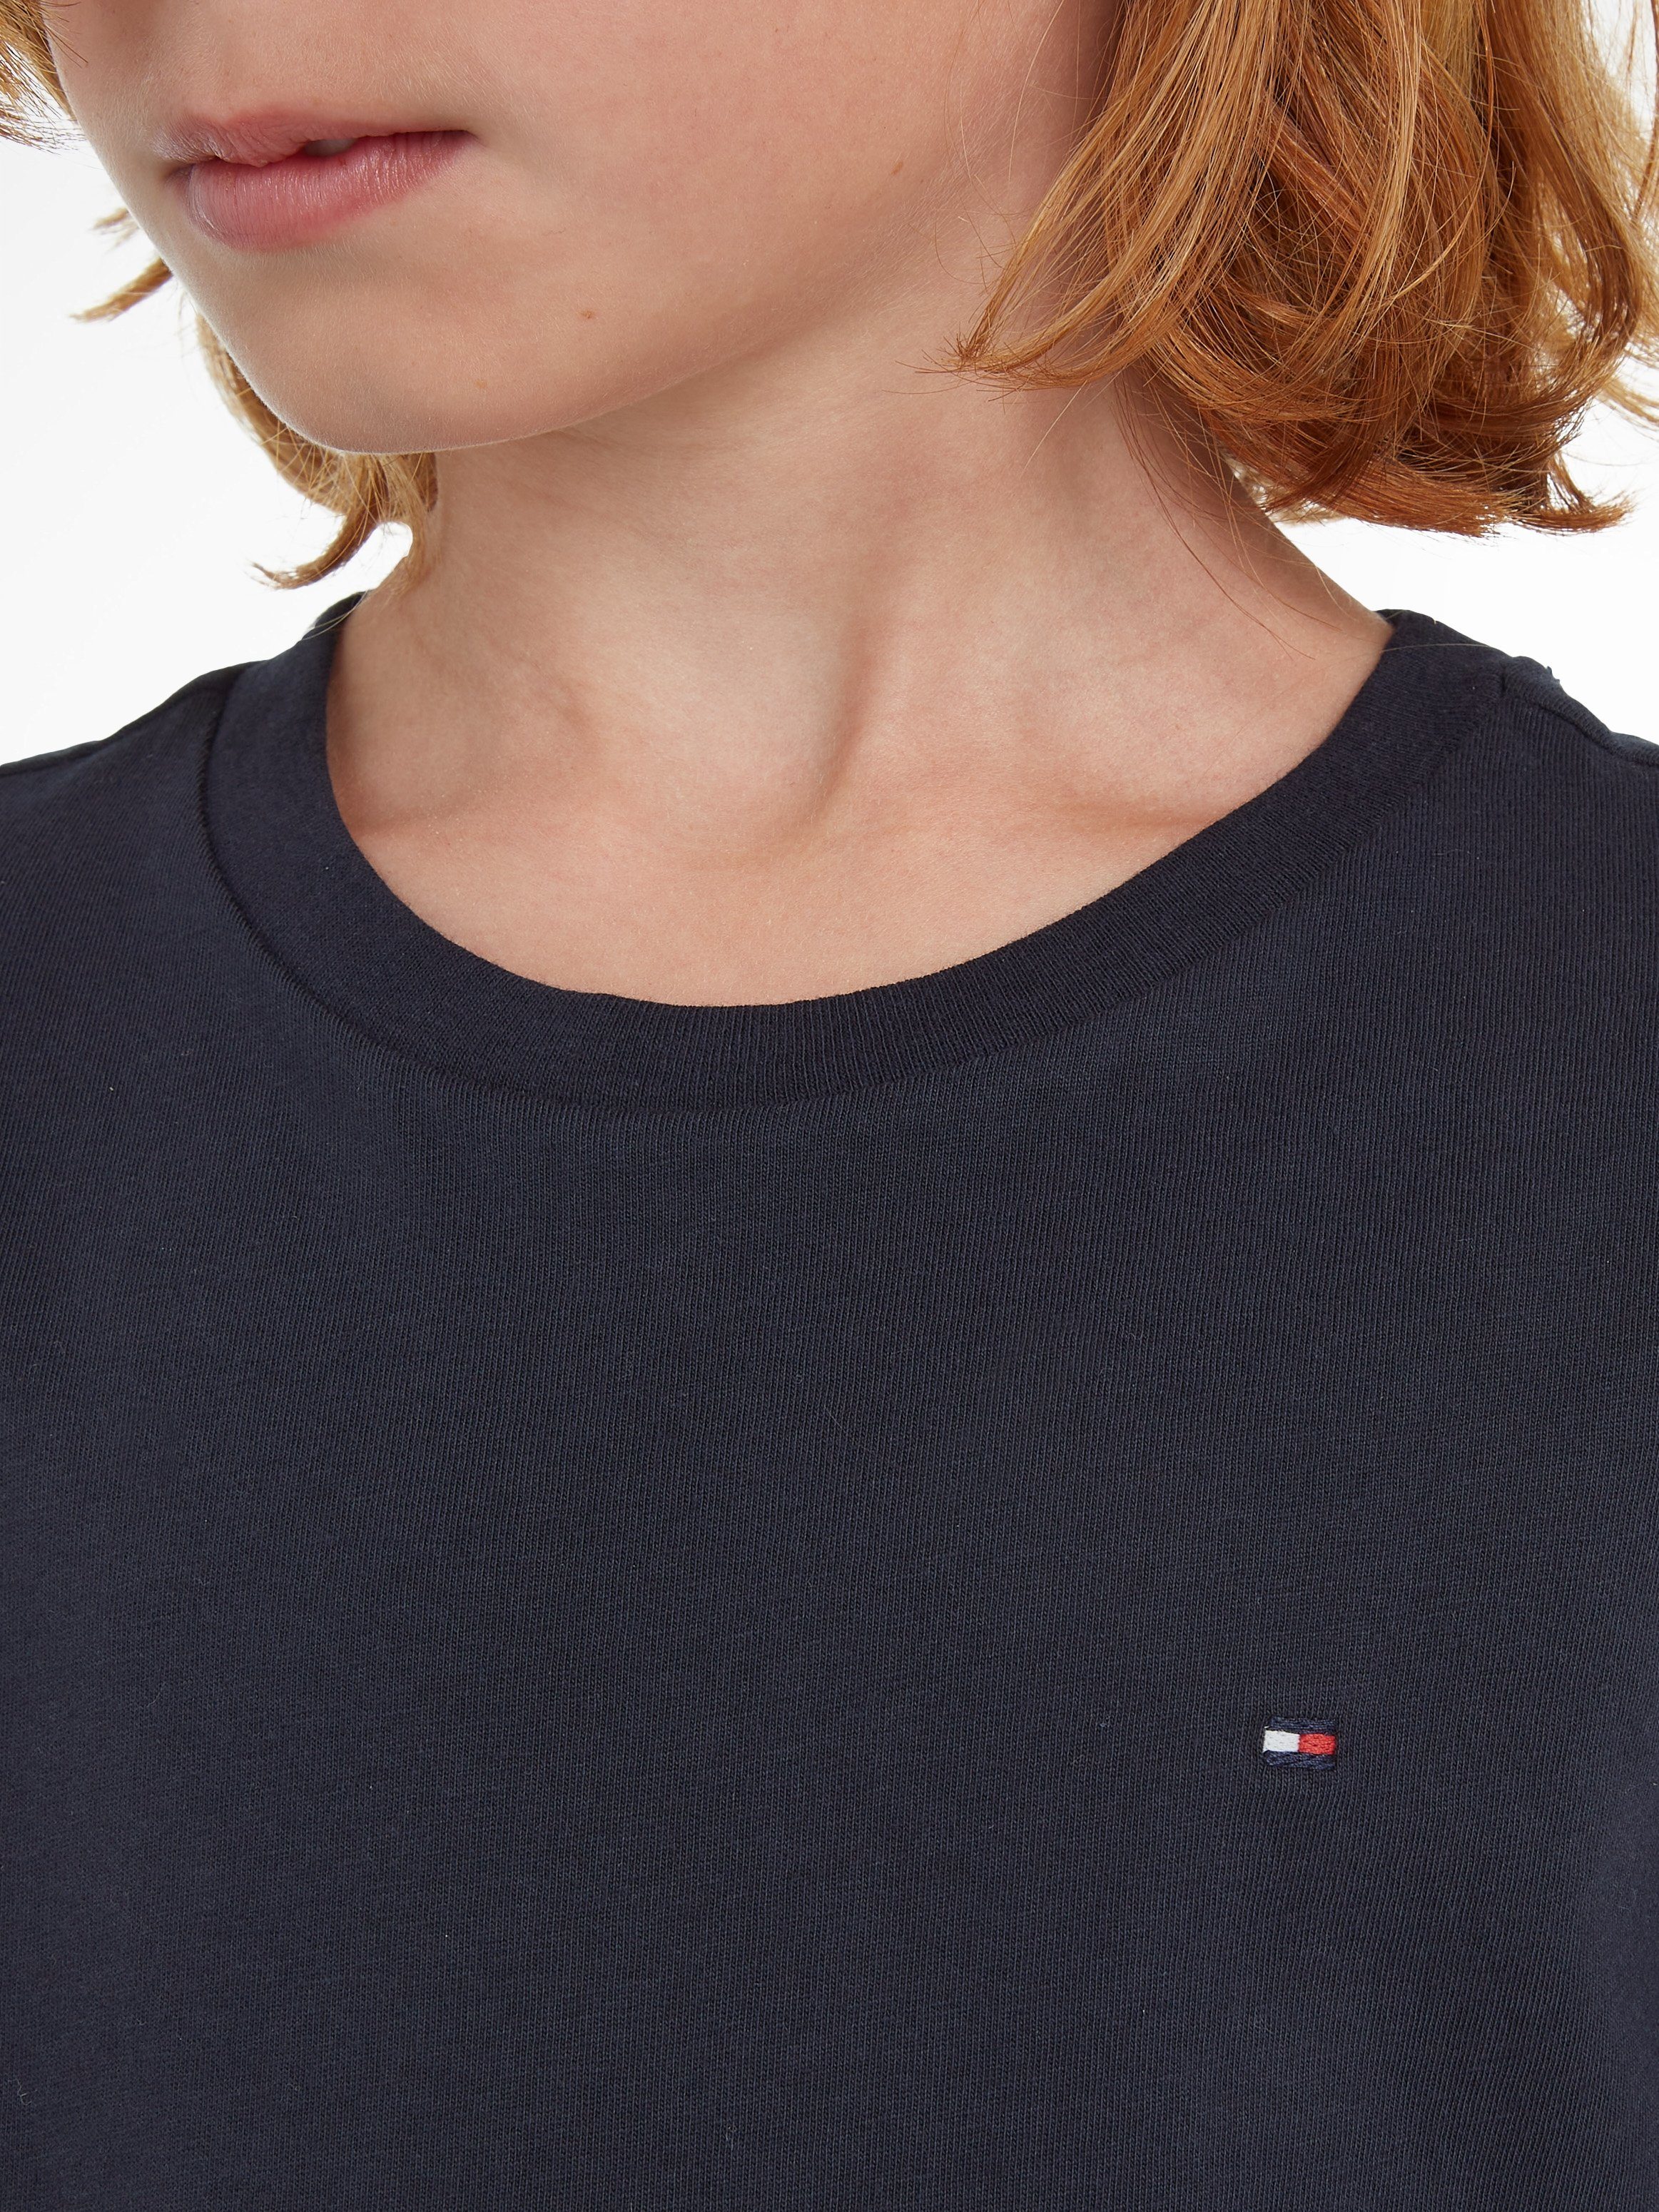 Tommy Hilfiger Jungen Junior Kids BOYS Kinder T-Shirt BASIC KNIT CN MiniMe,für